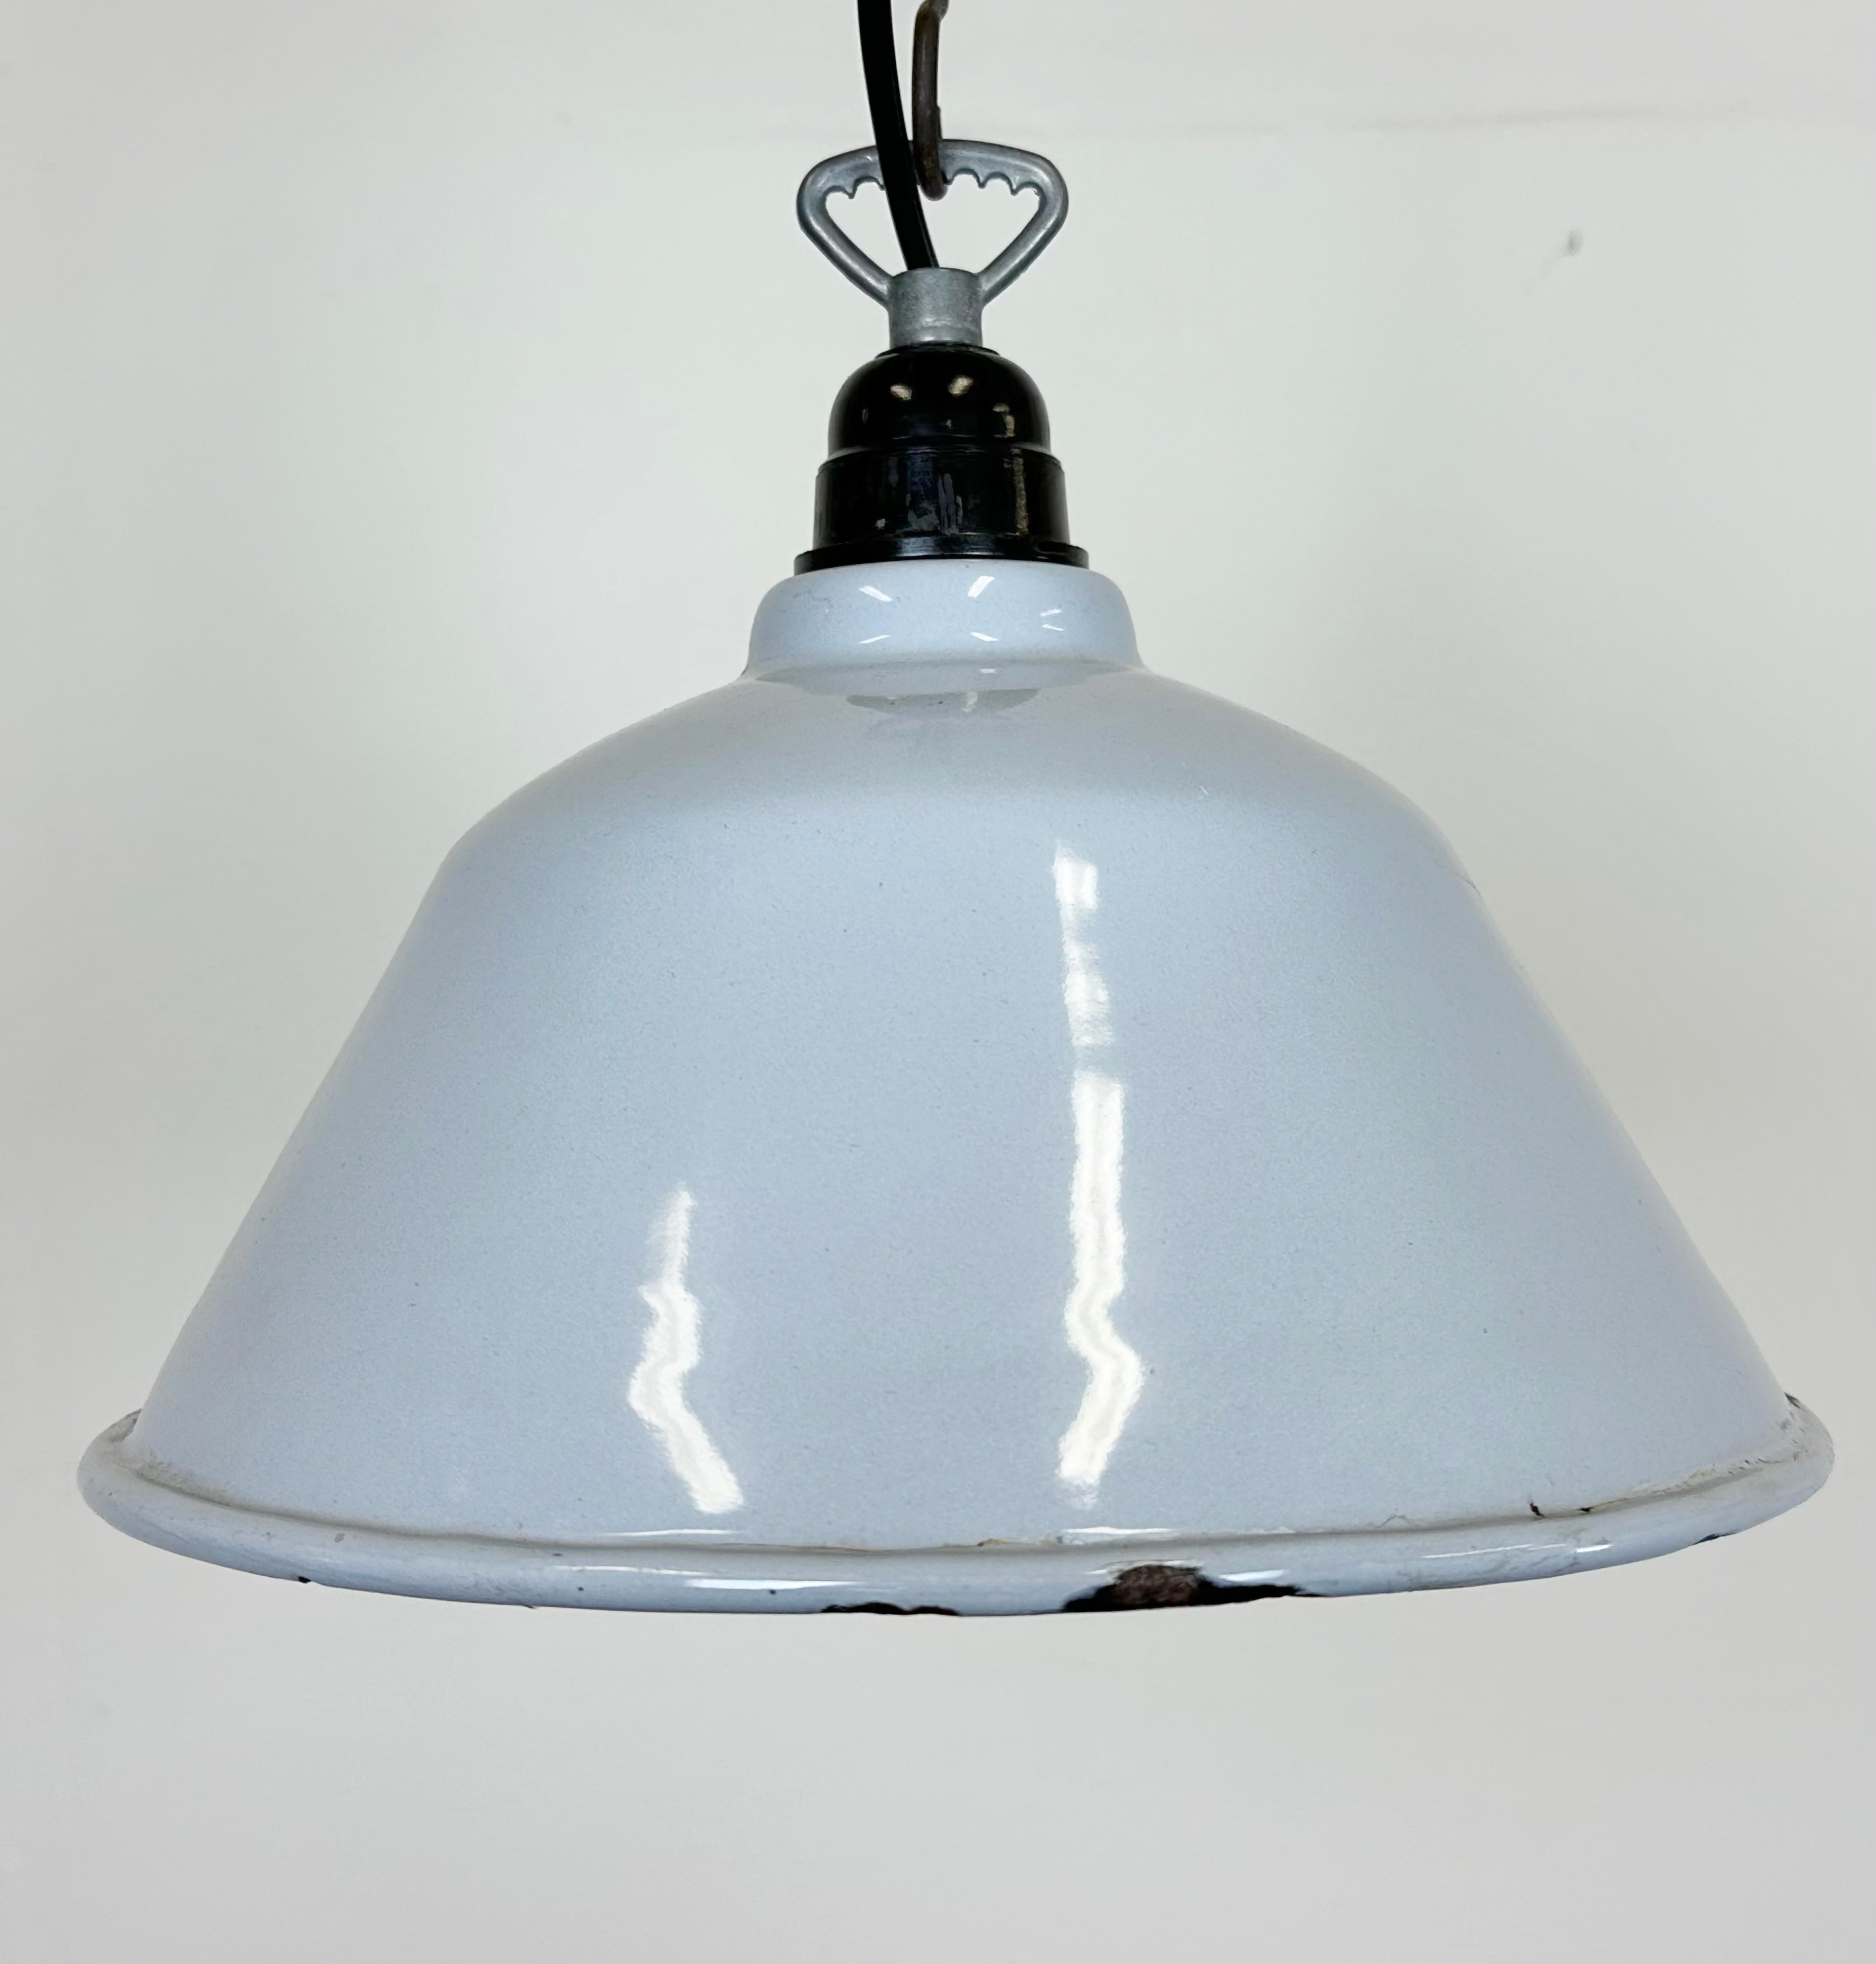 Czech Industrial French Grey Enamel Factory Pendant Lamp, 1960s For Sale